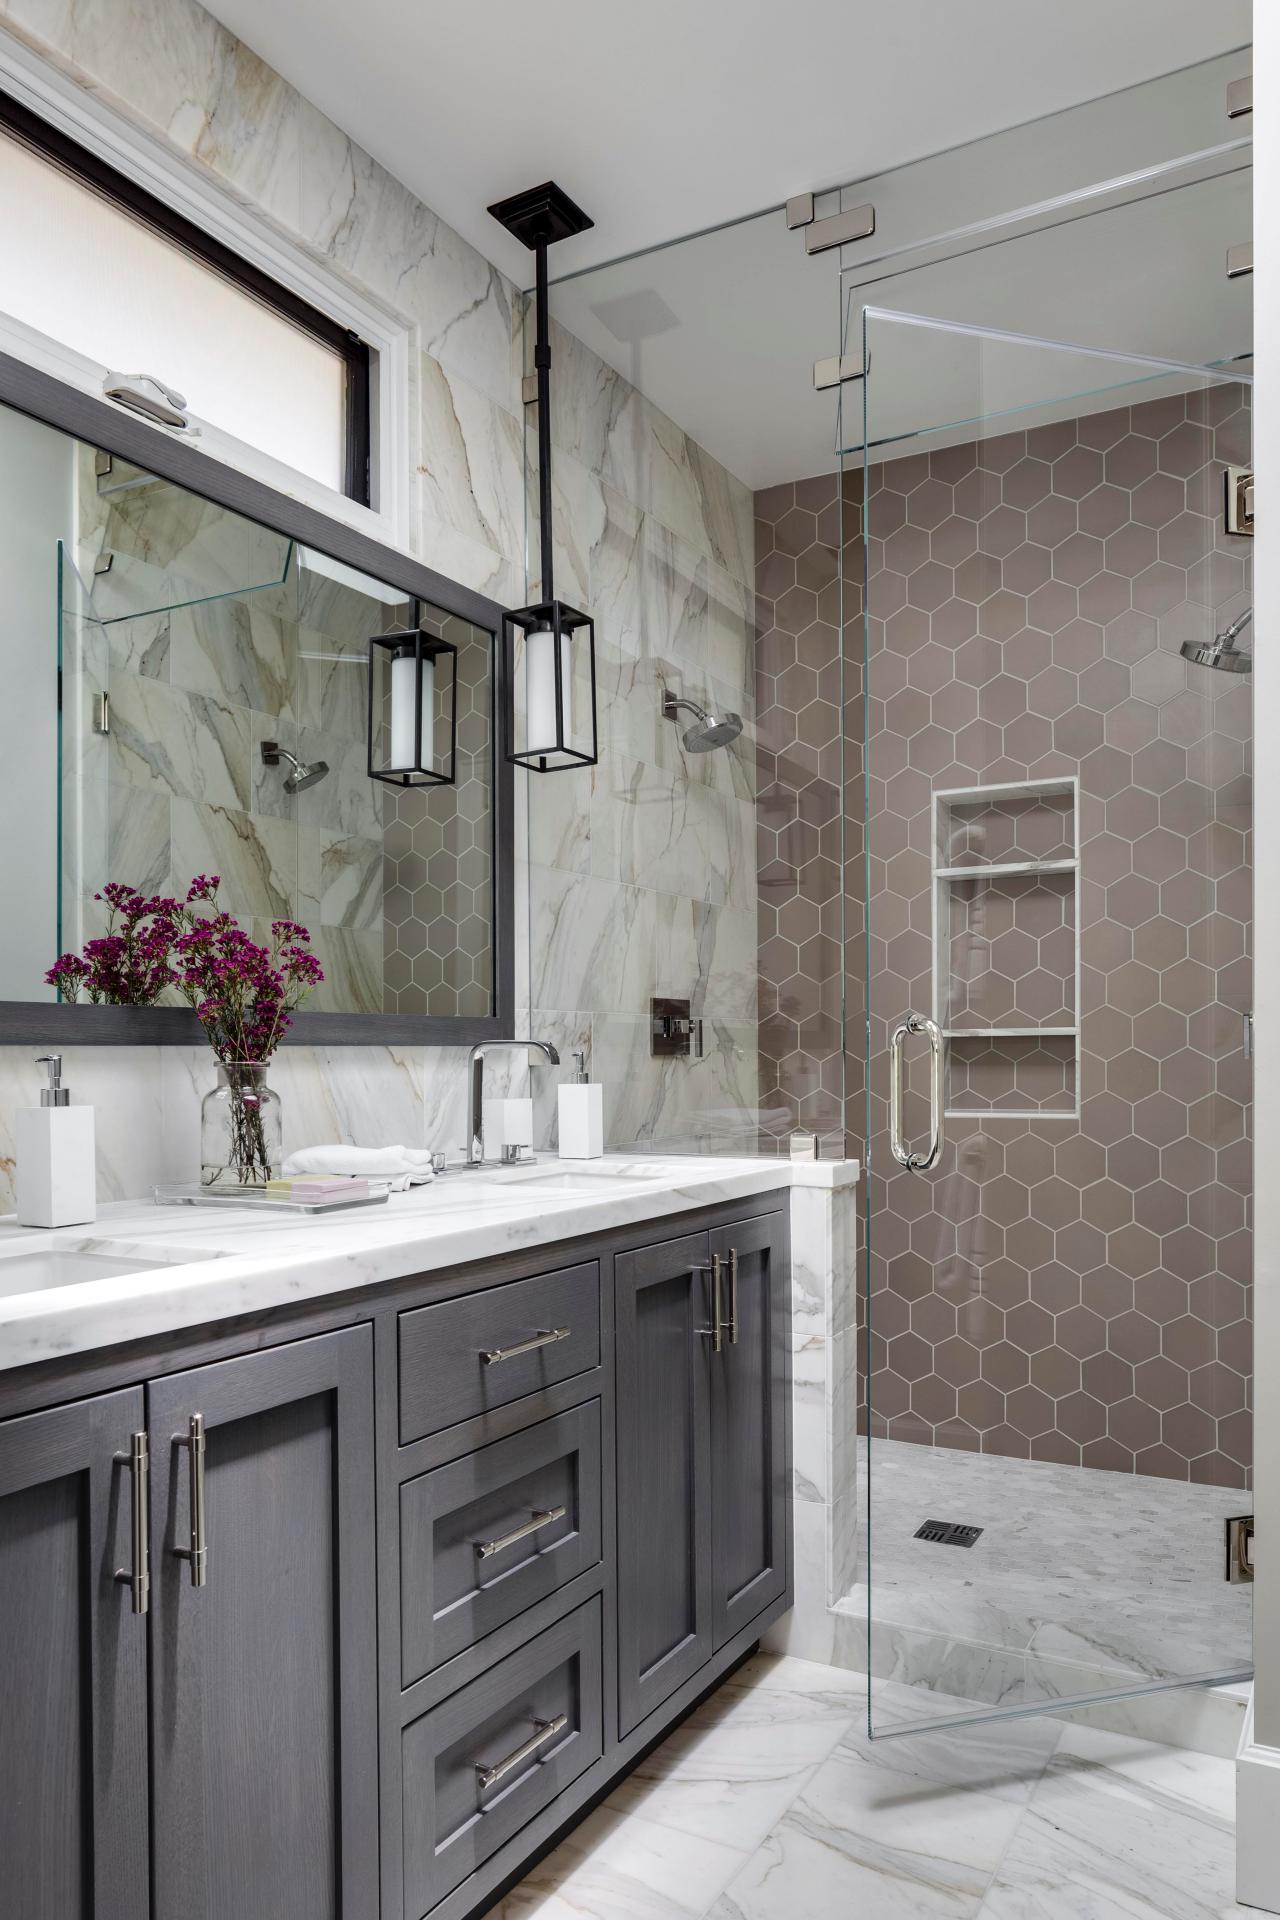 9 Bold Bathroom Tile Designs | HGTV's Decorating & Design ...